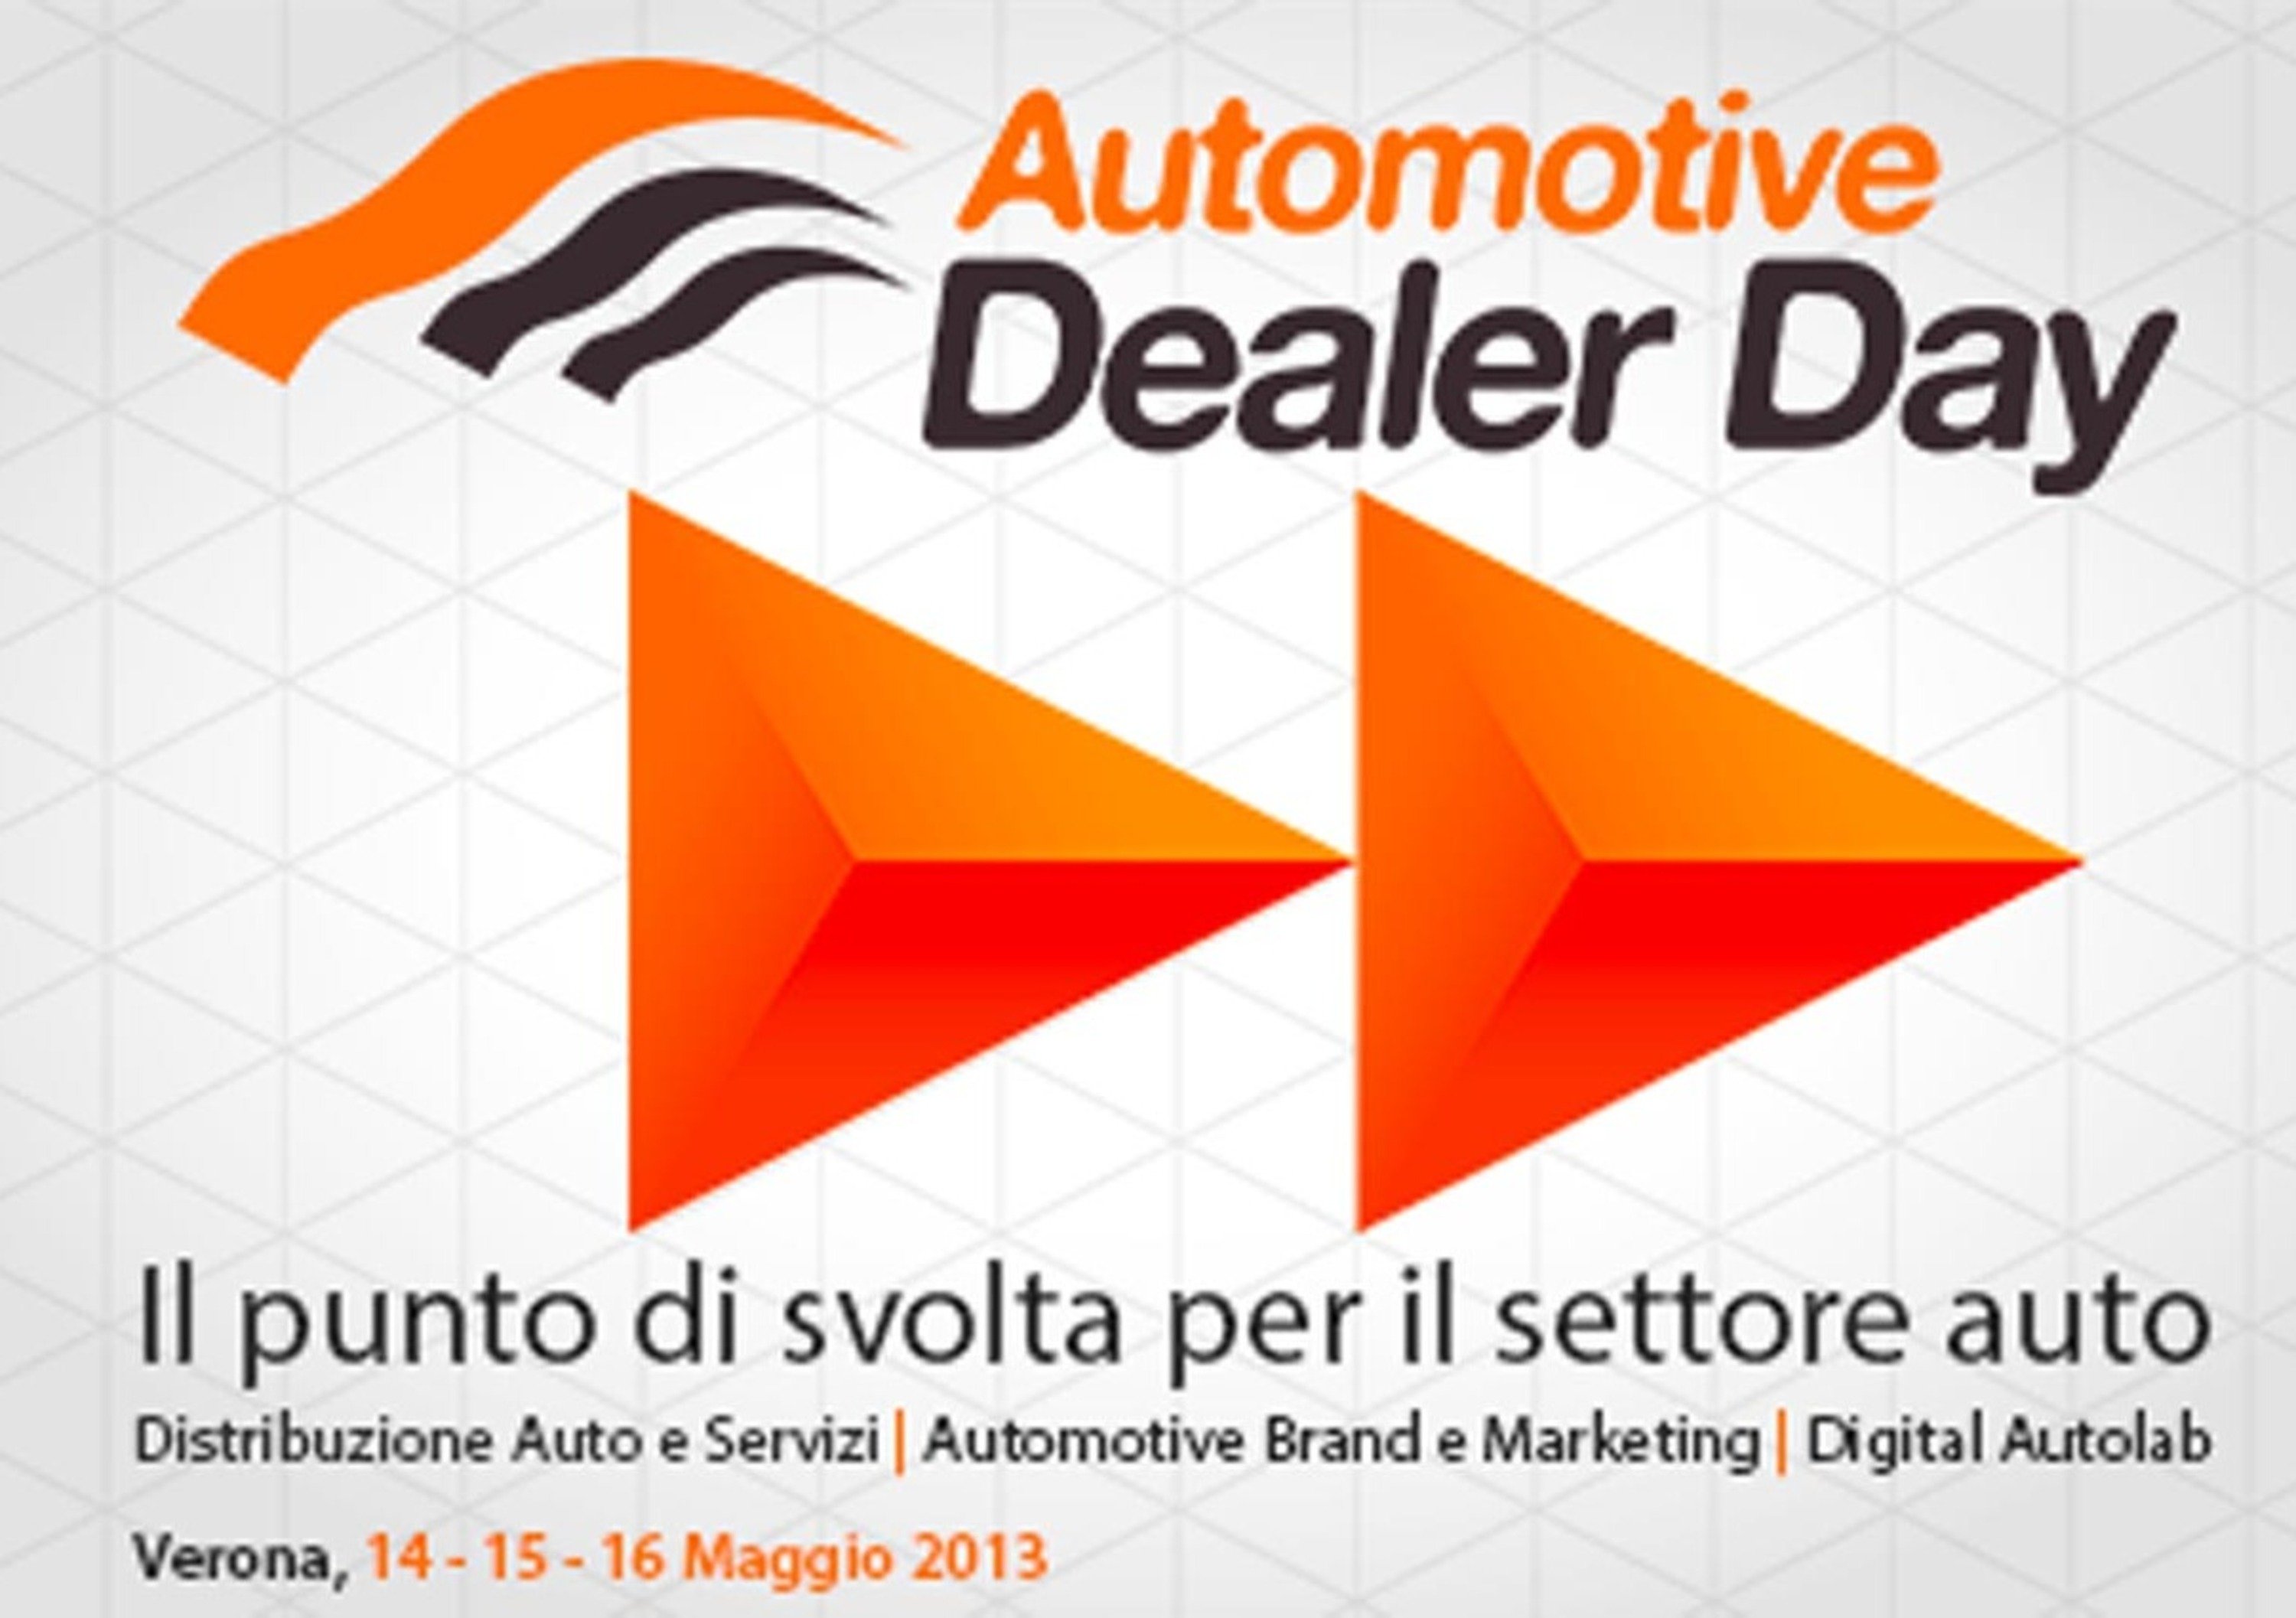 Automotive Dealer Day: tutte le informazioni utili